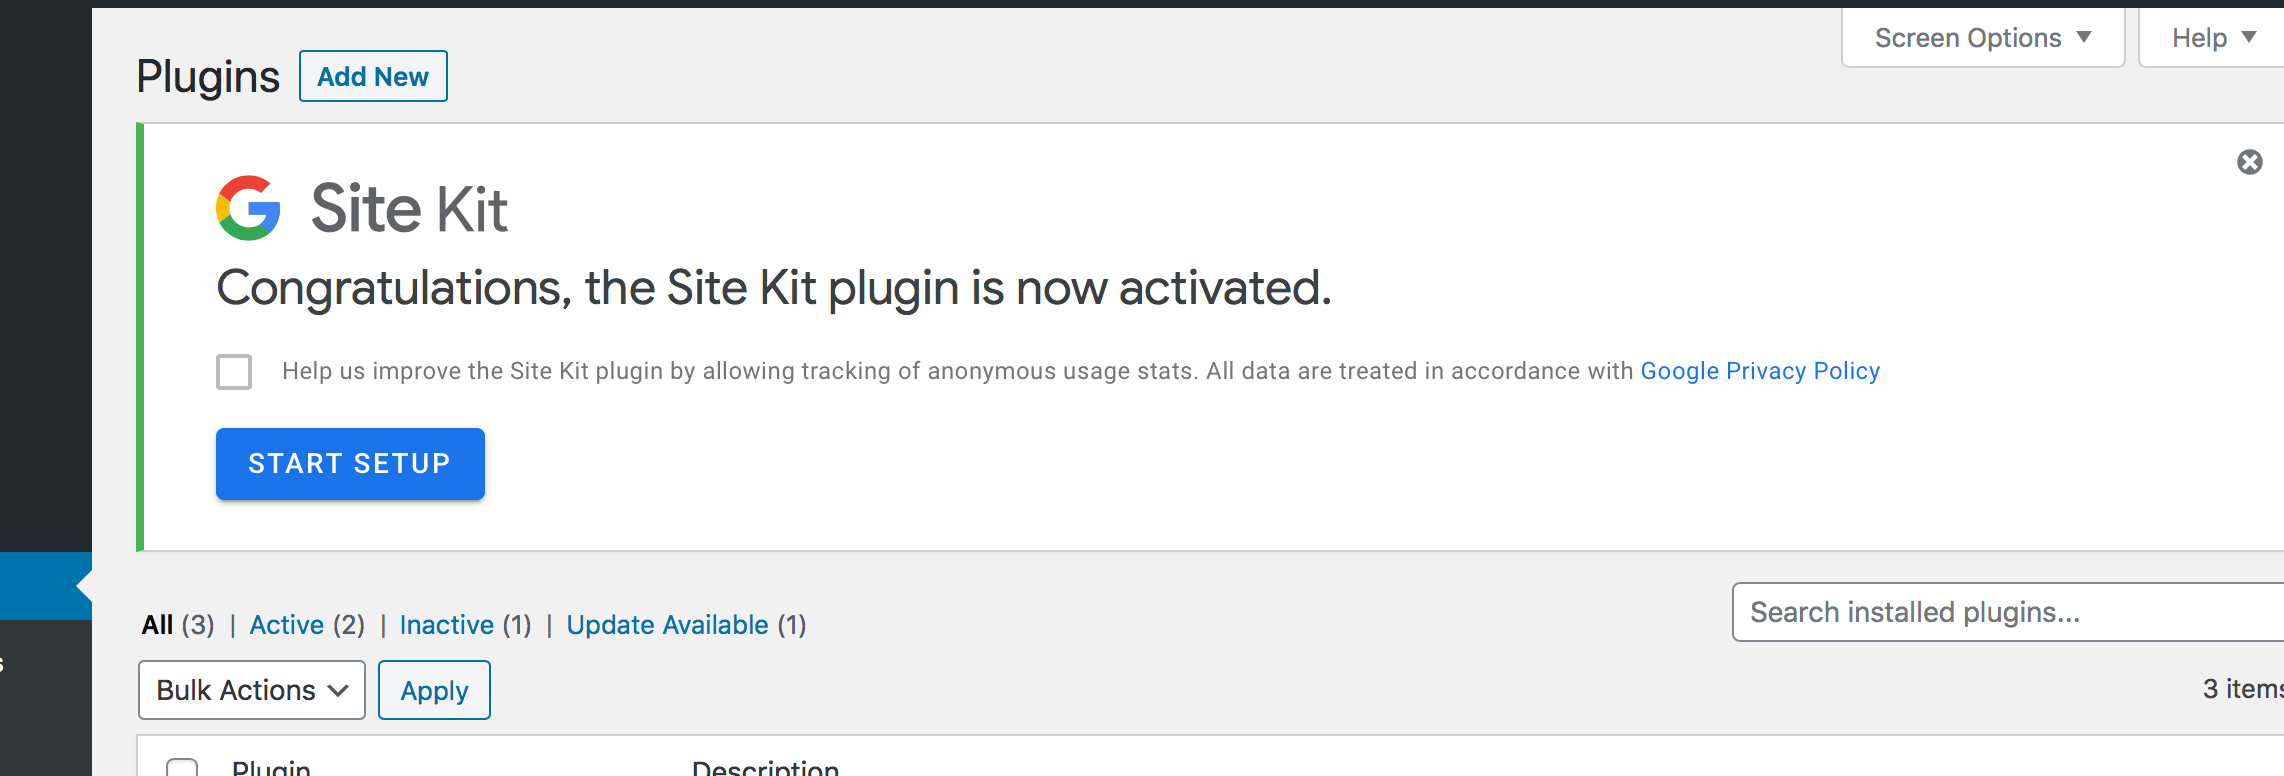 Starting the Site Kit plugin setup